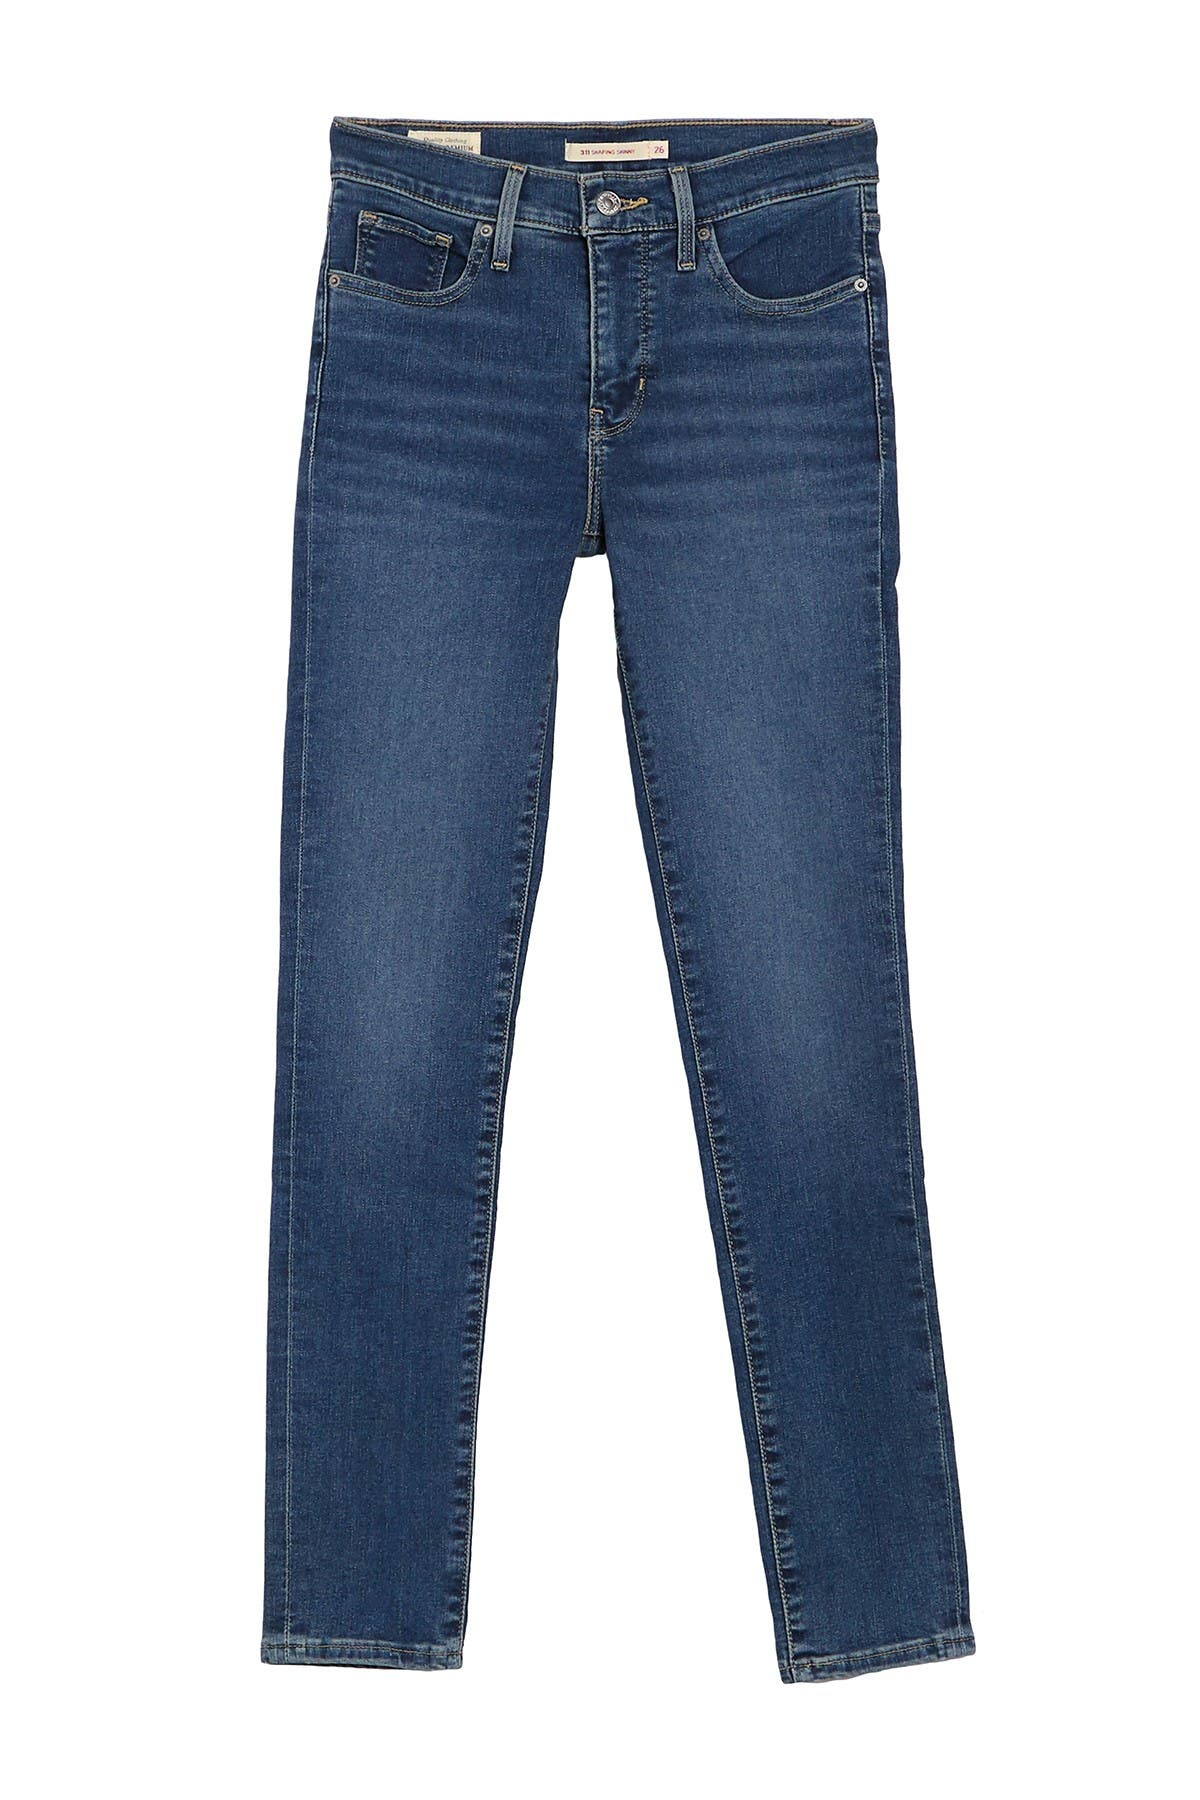 Levi S 311 Shaping Skinny Jeans Hautelook